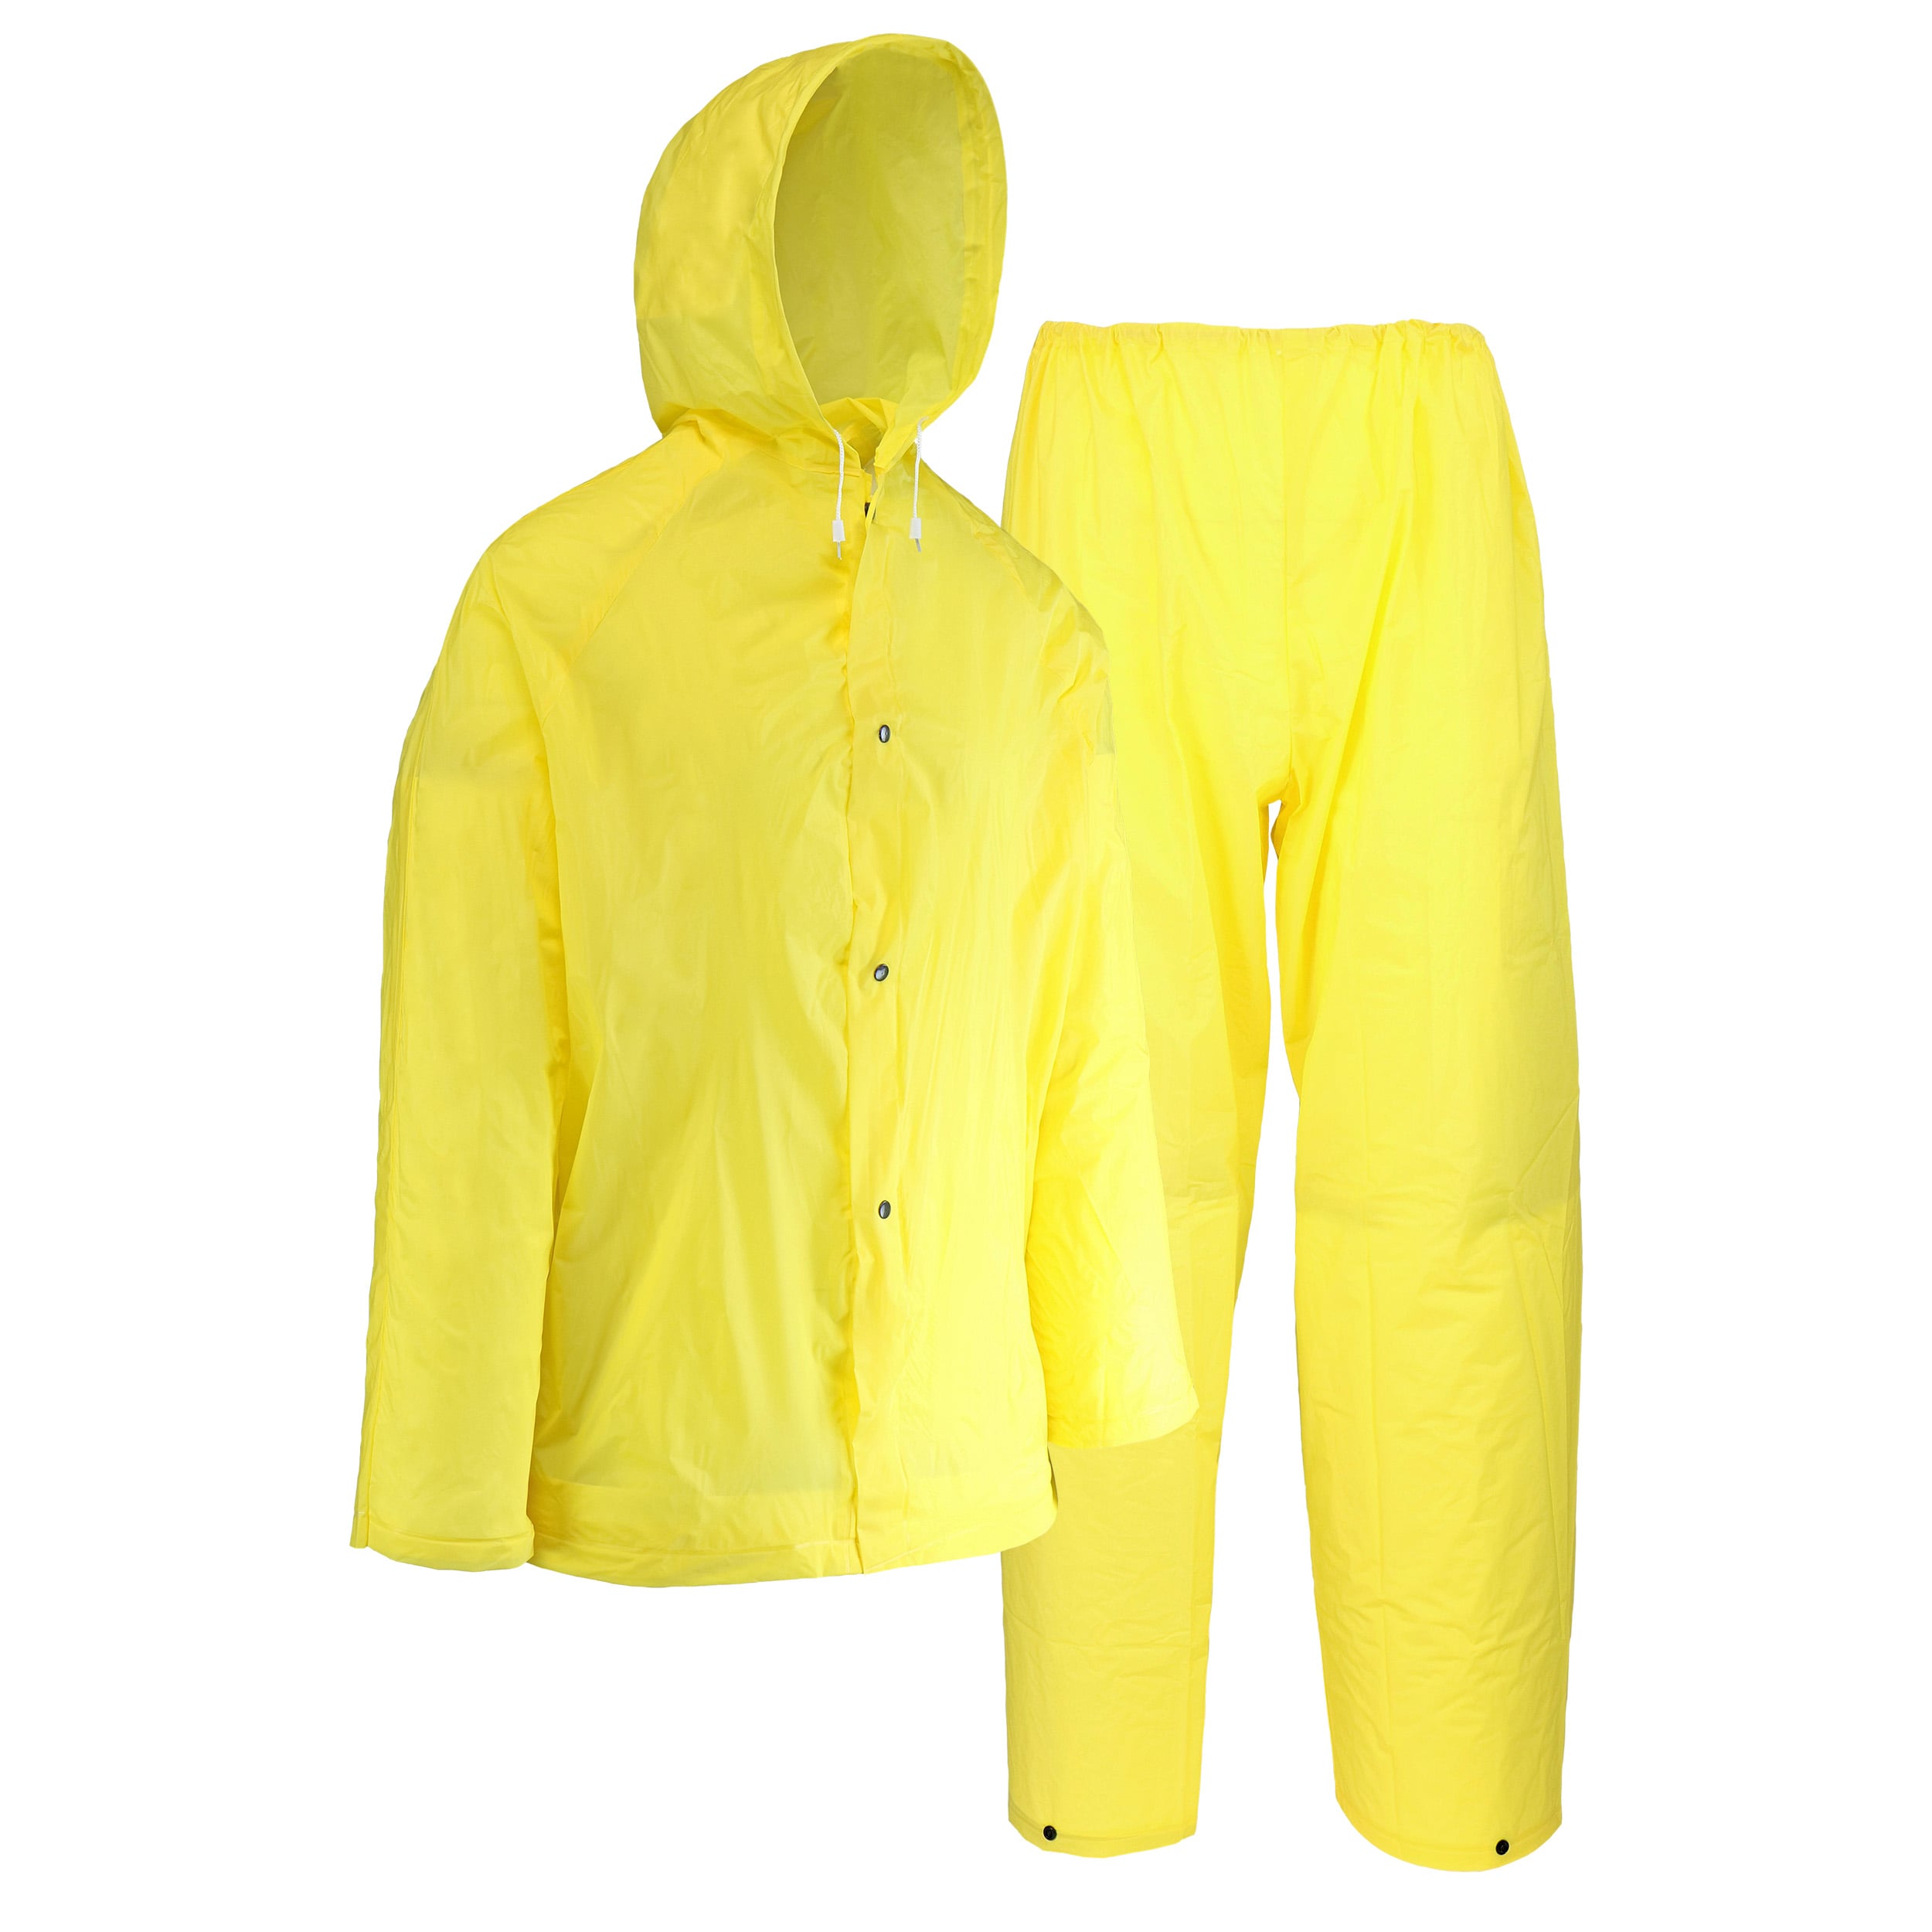 Stormrider 2-PC Rain Suit (Black/Hi-Vis Yellow)